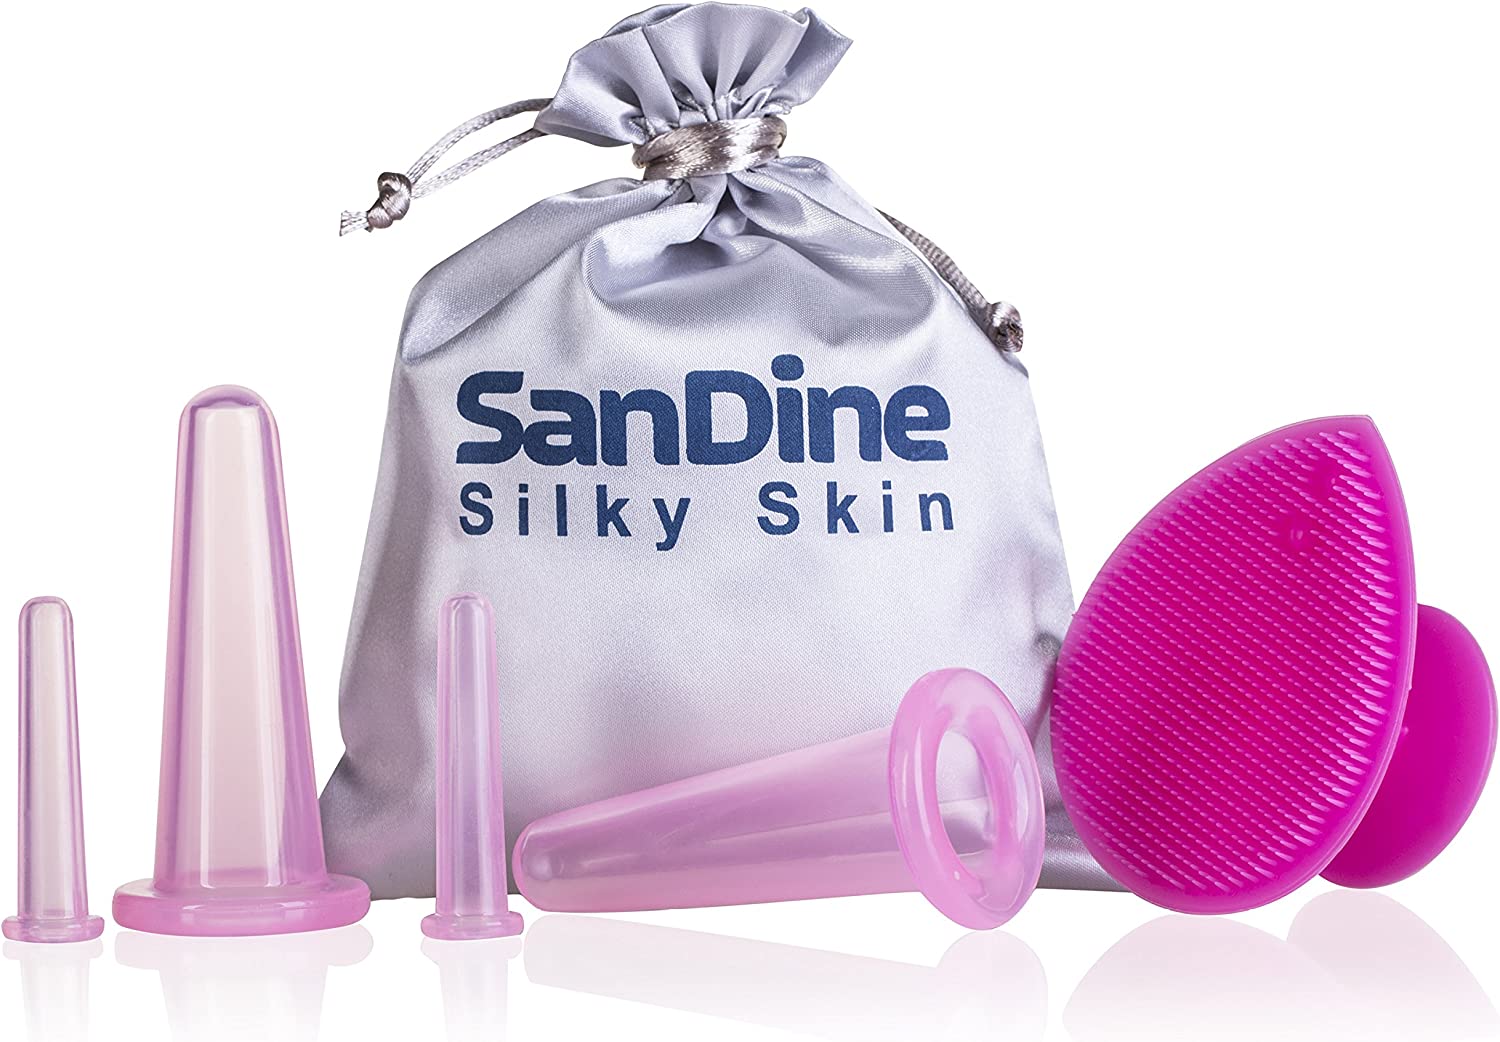 SanDine Silky Skin Mini Exfoliating Facial Cupping Set, 5-Piece